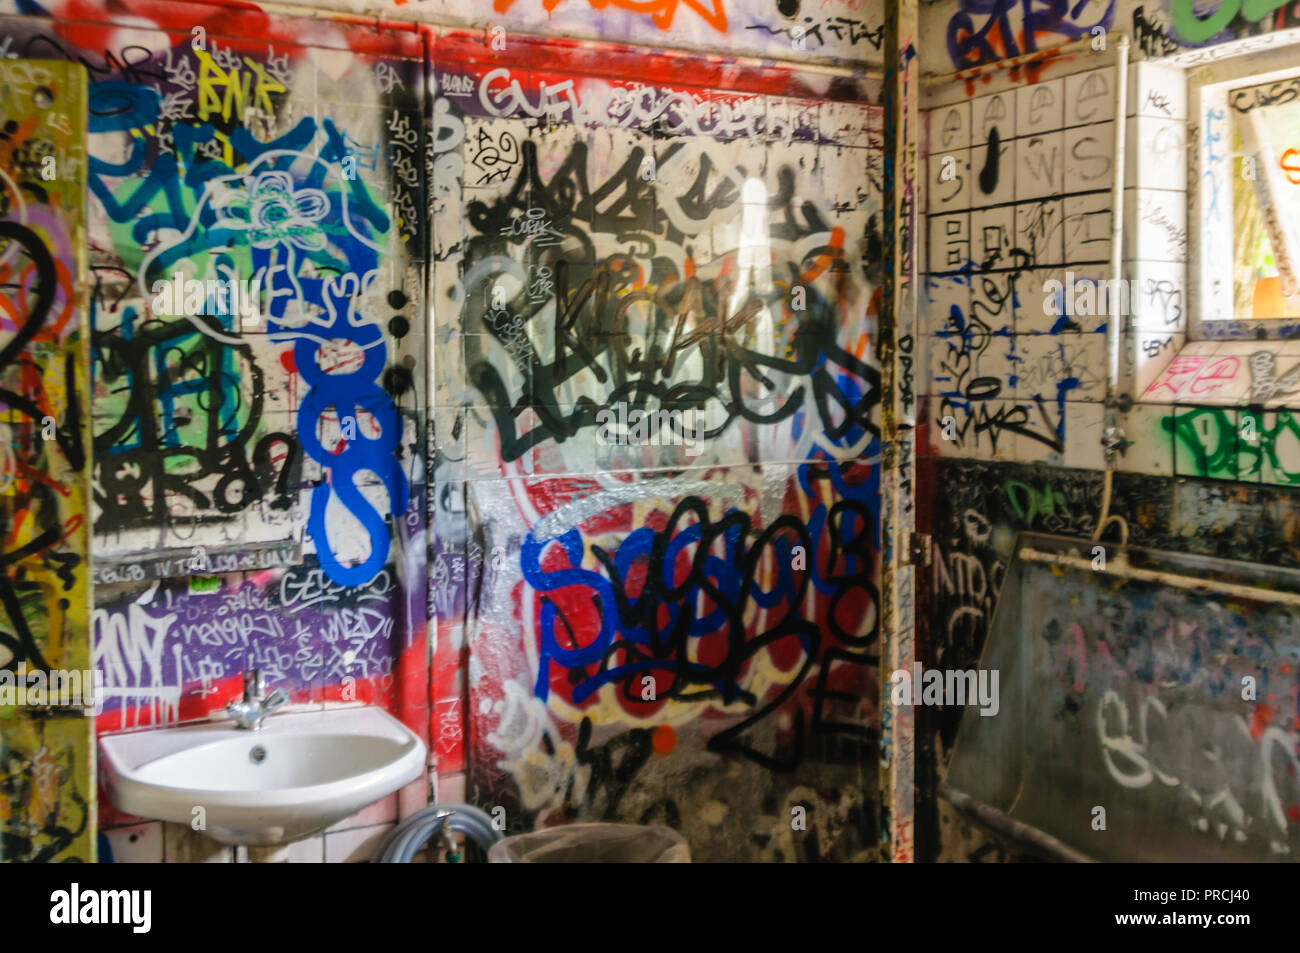 Graffiti on the walls of a public toilet in Freetown Christiania, Copenhagen, Denmark. Stock Photo